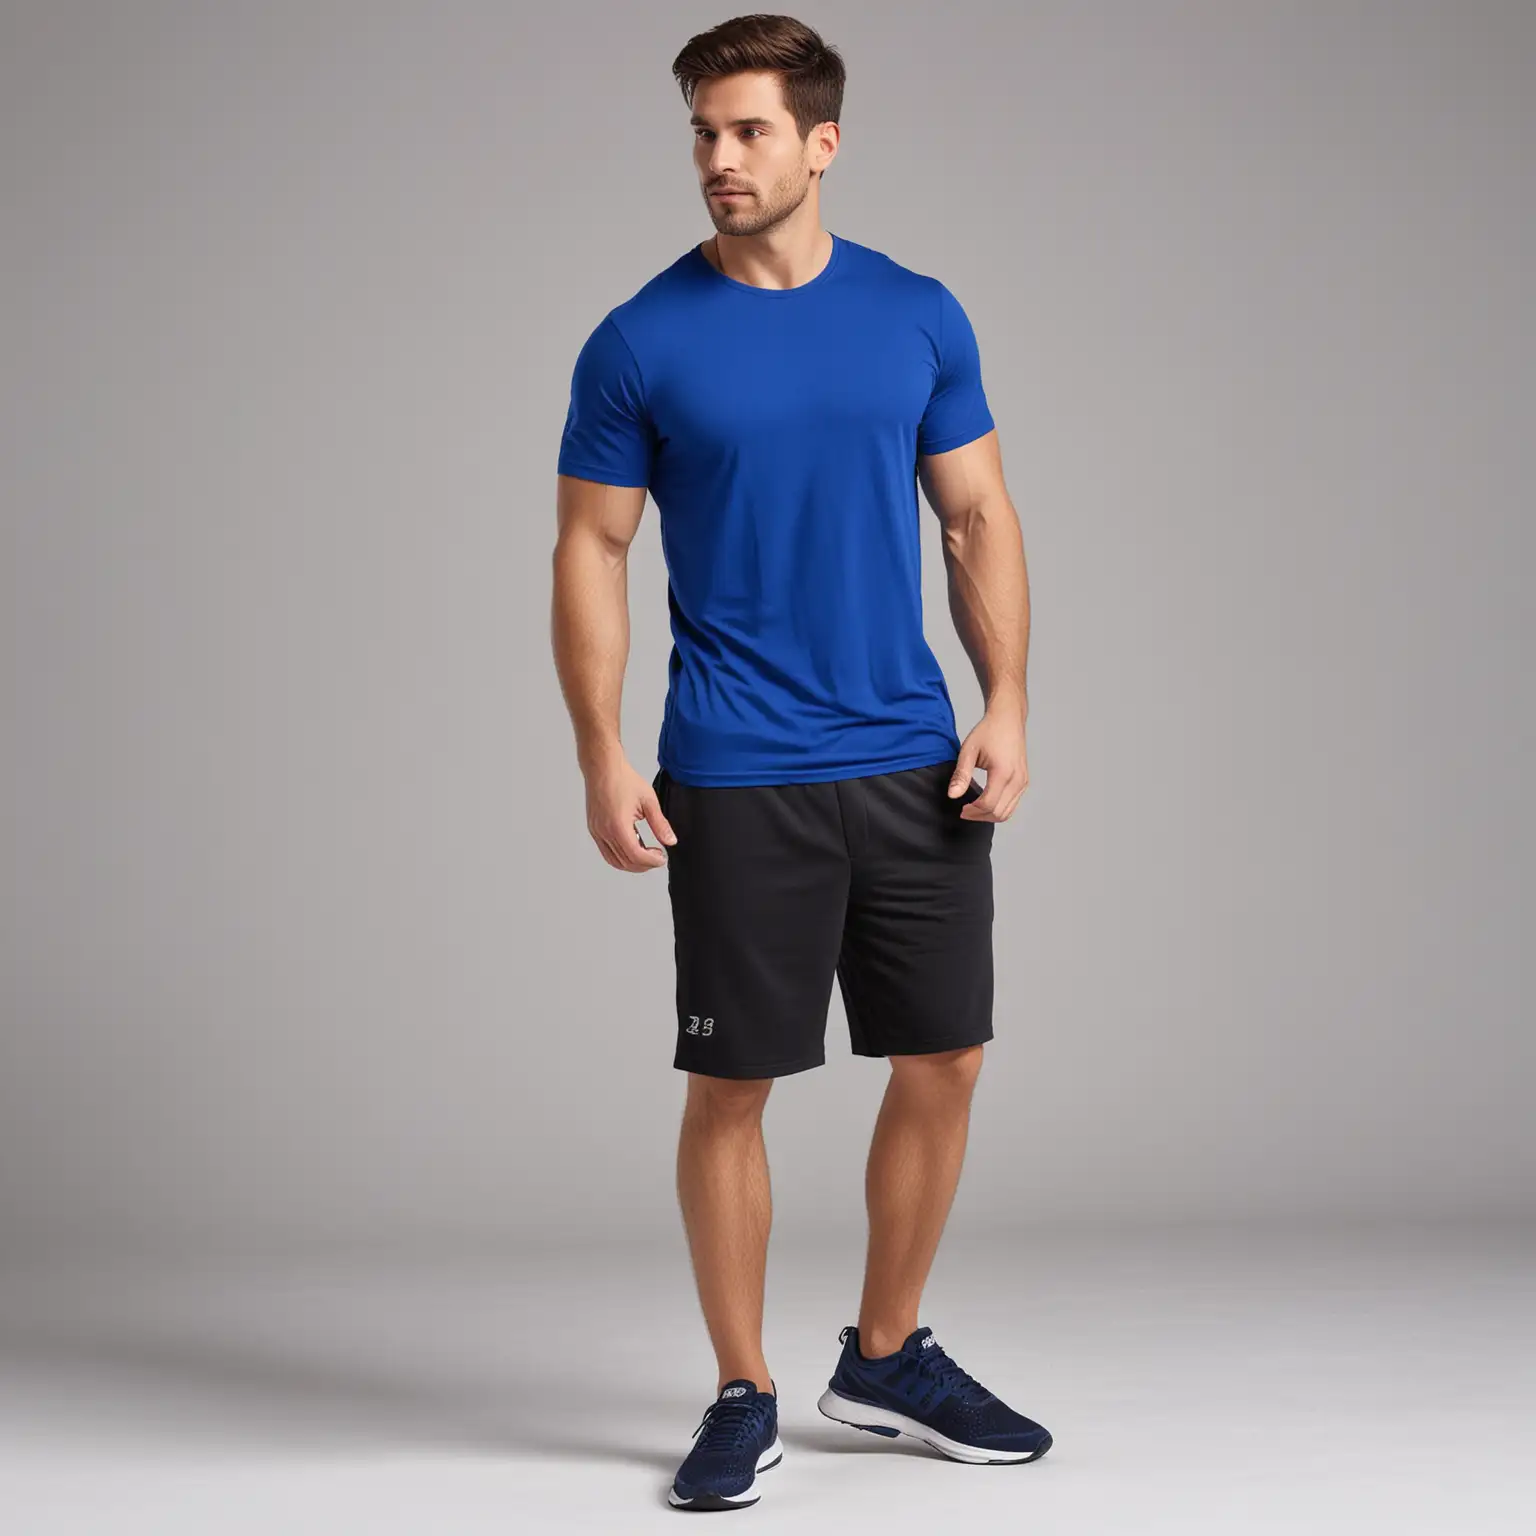 generete images of man wearing plain  royal blue tshirt for gym 